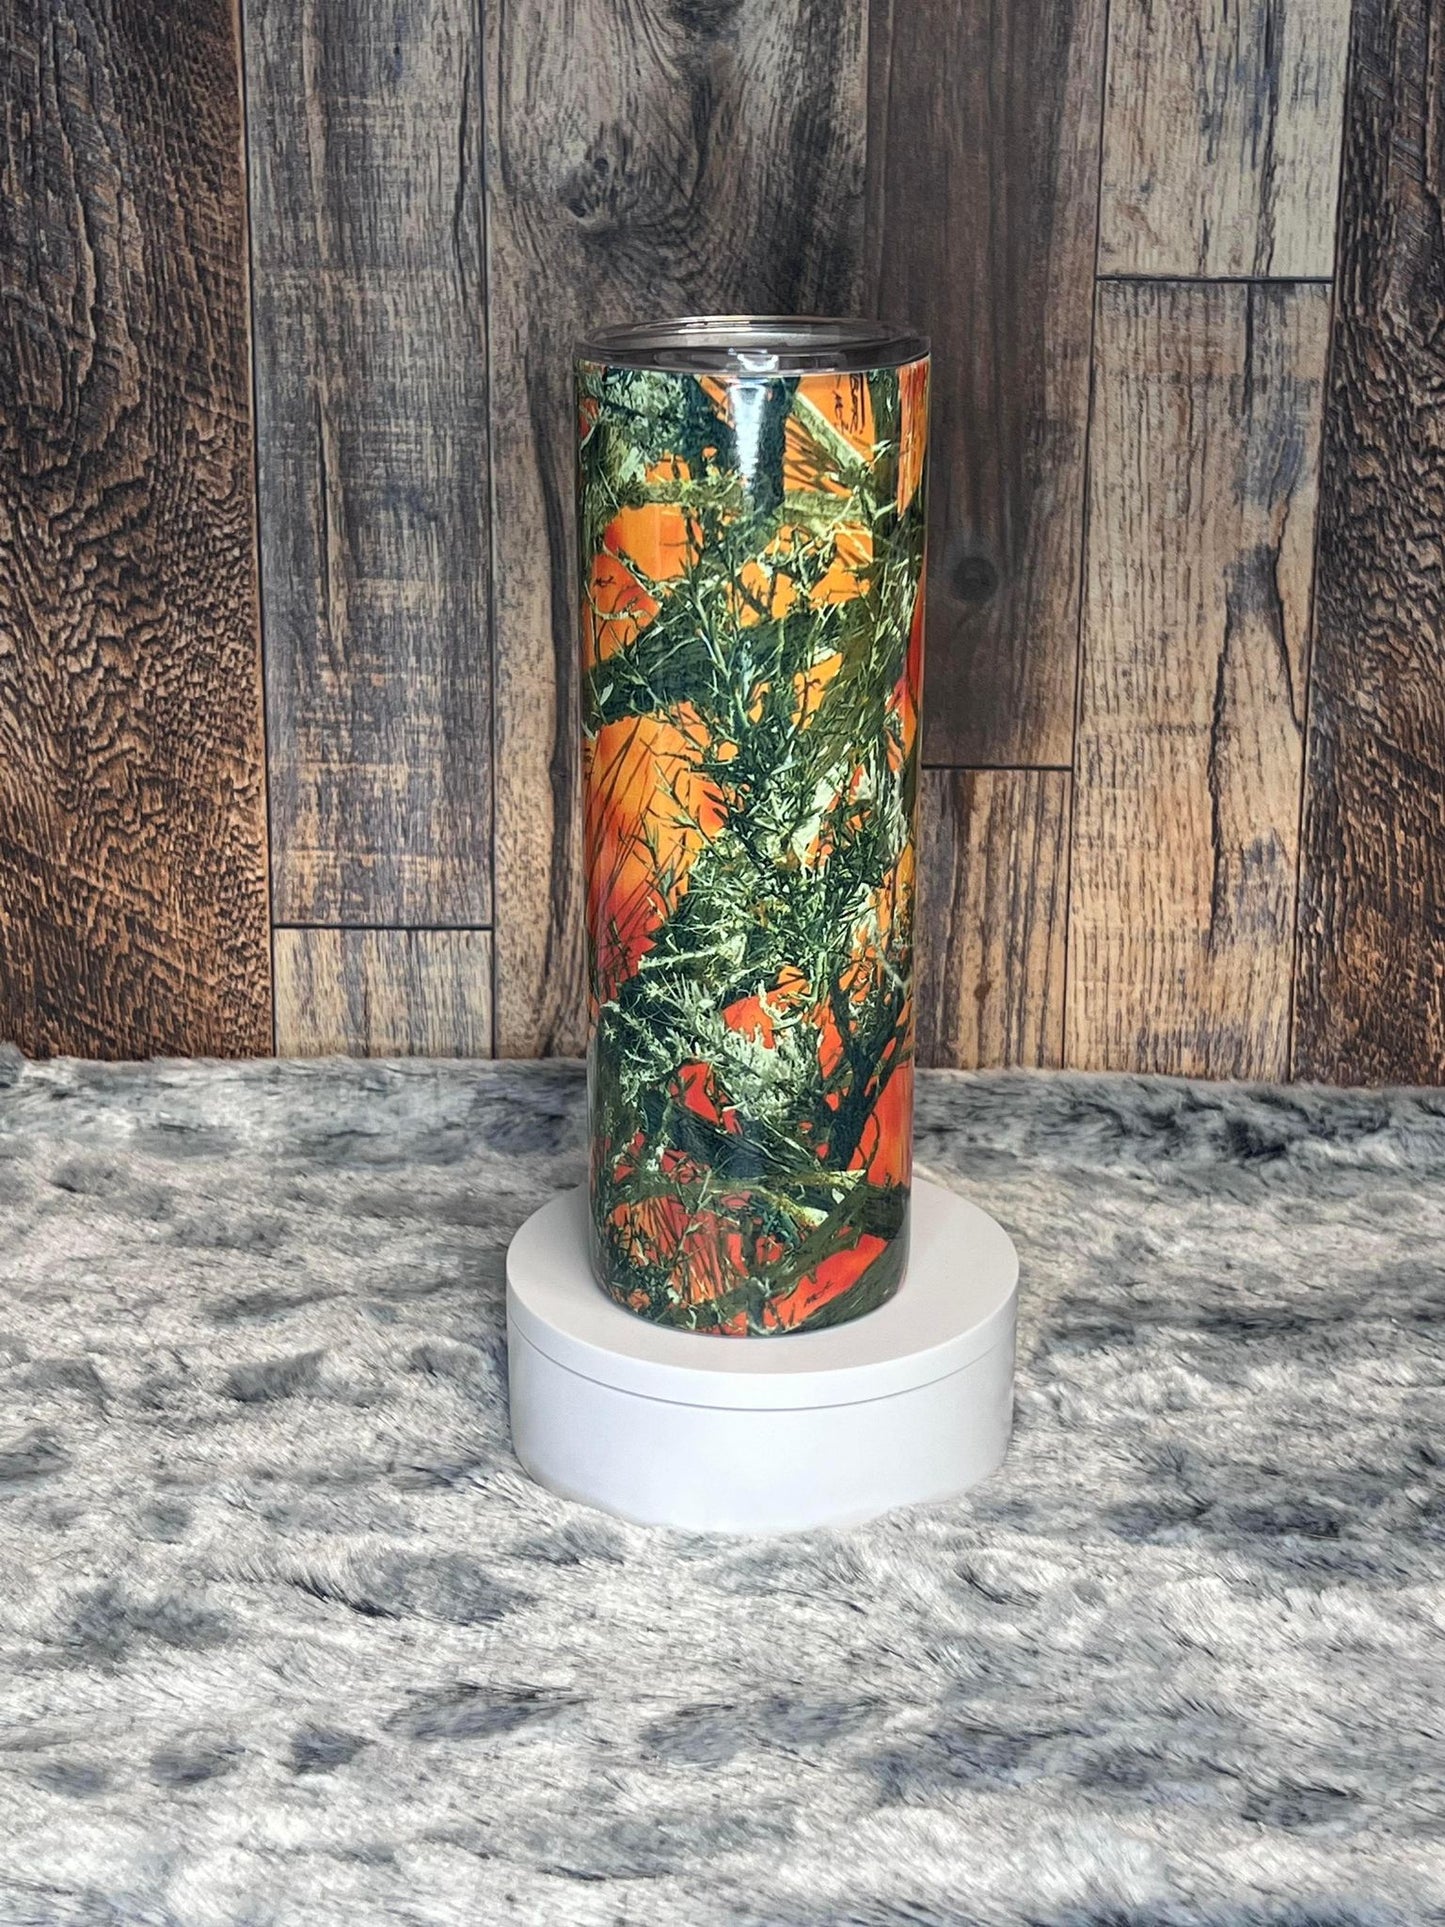 Orange Camo Tumbler – Swirly Inks N Glittered Designs